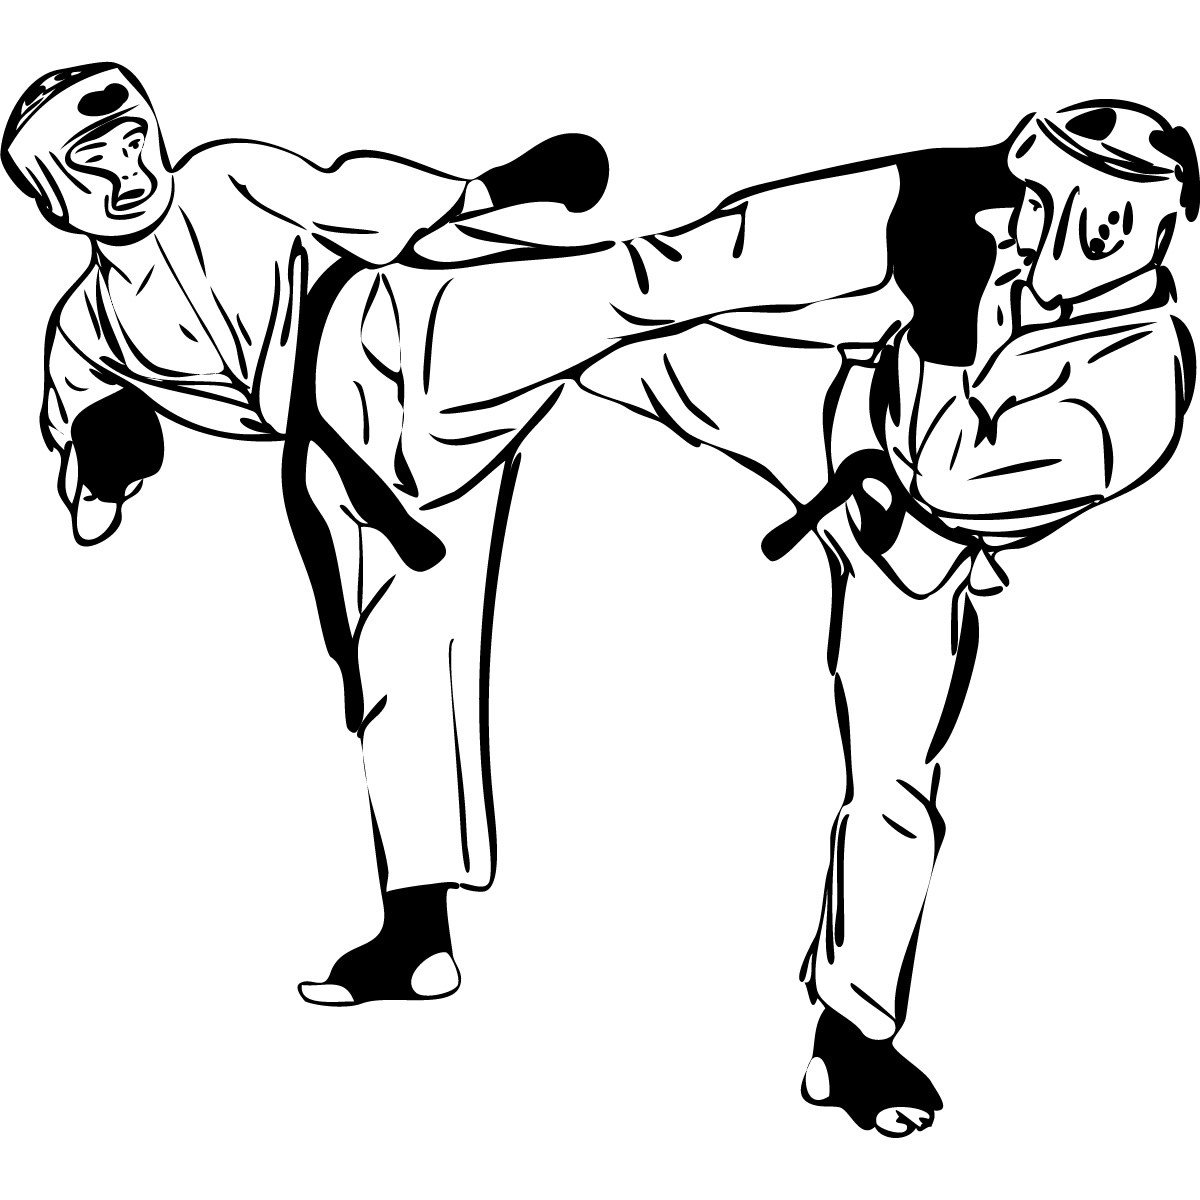 clip art karate logo - photo #45